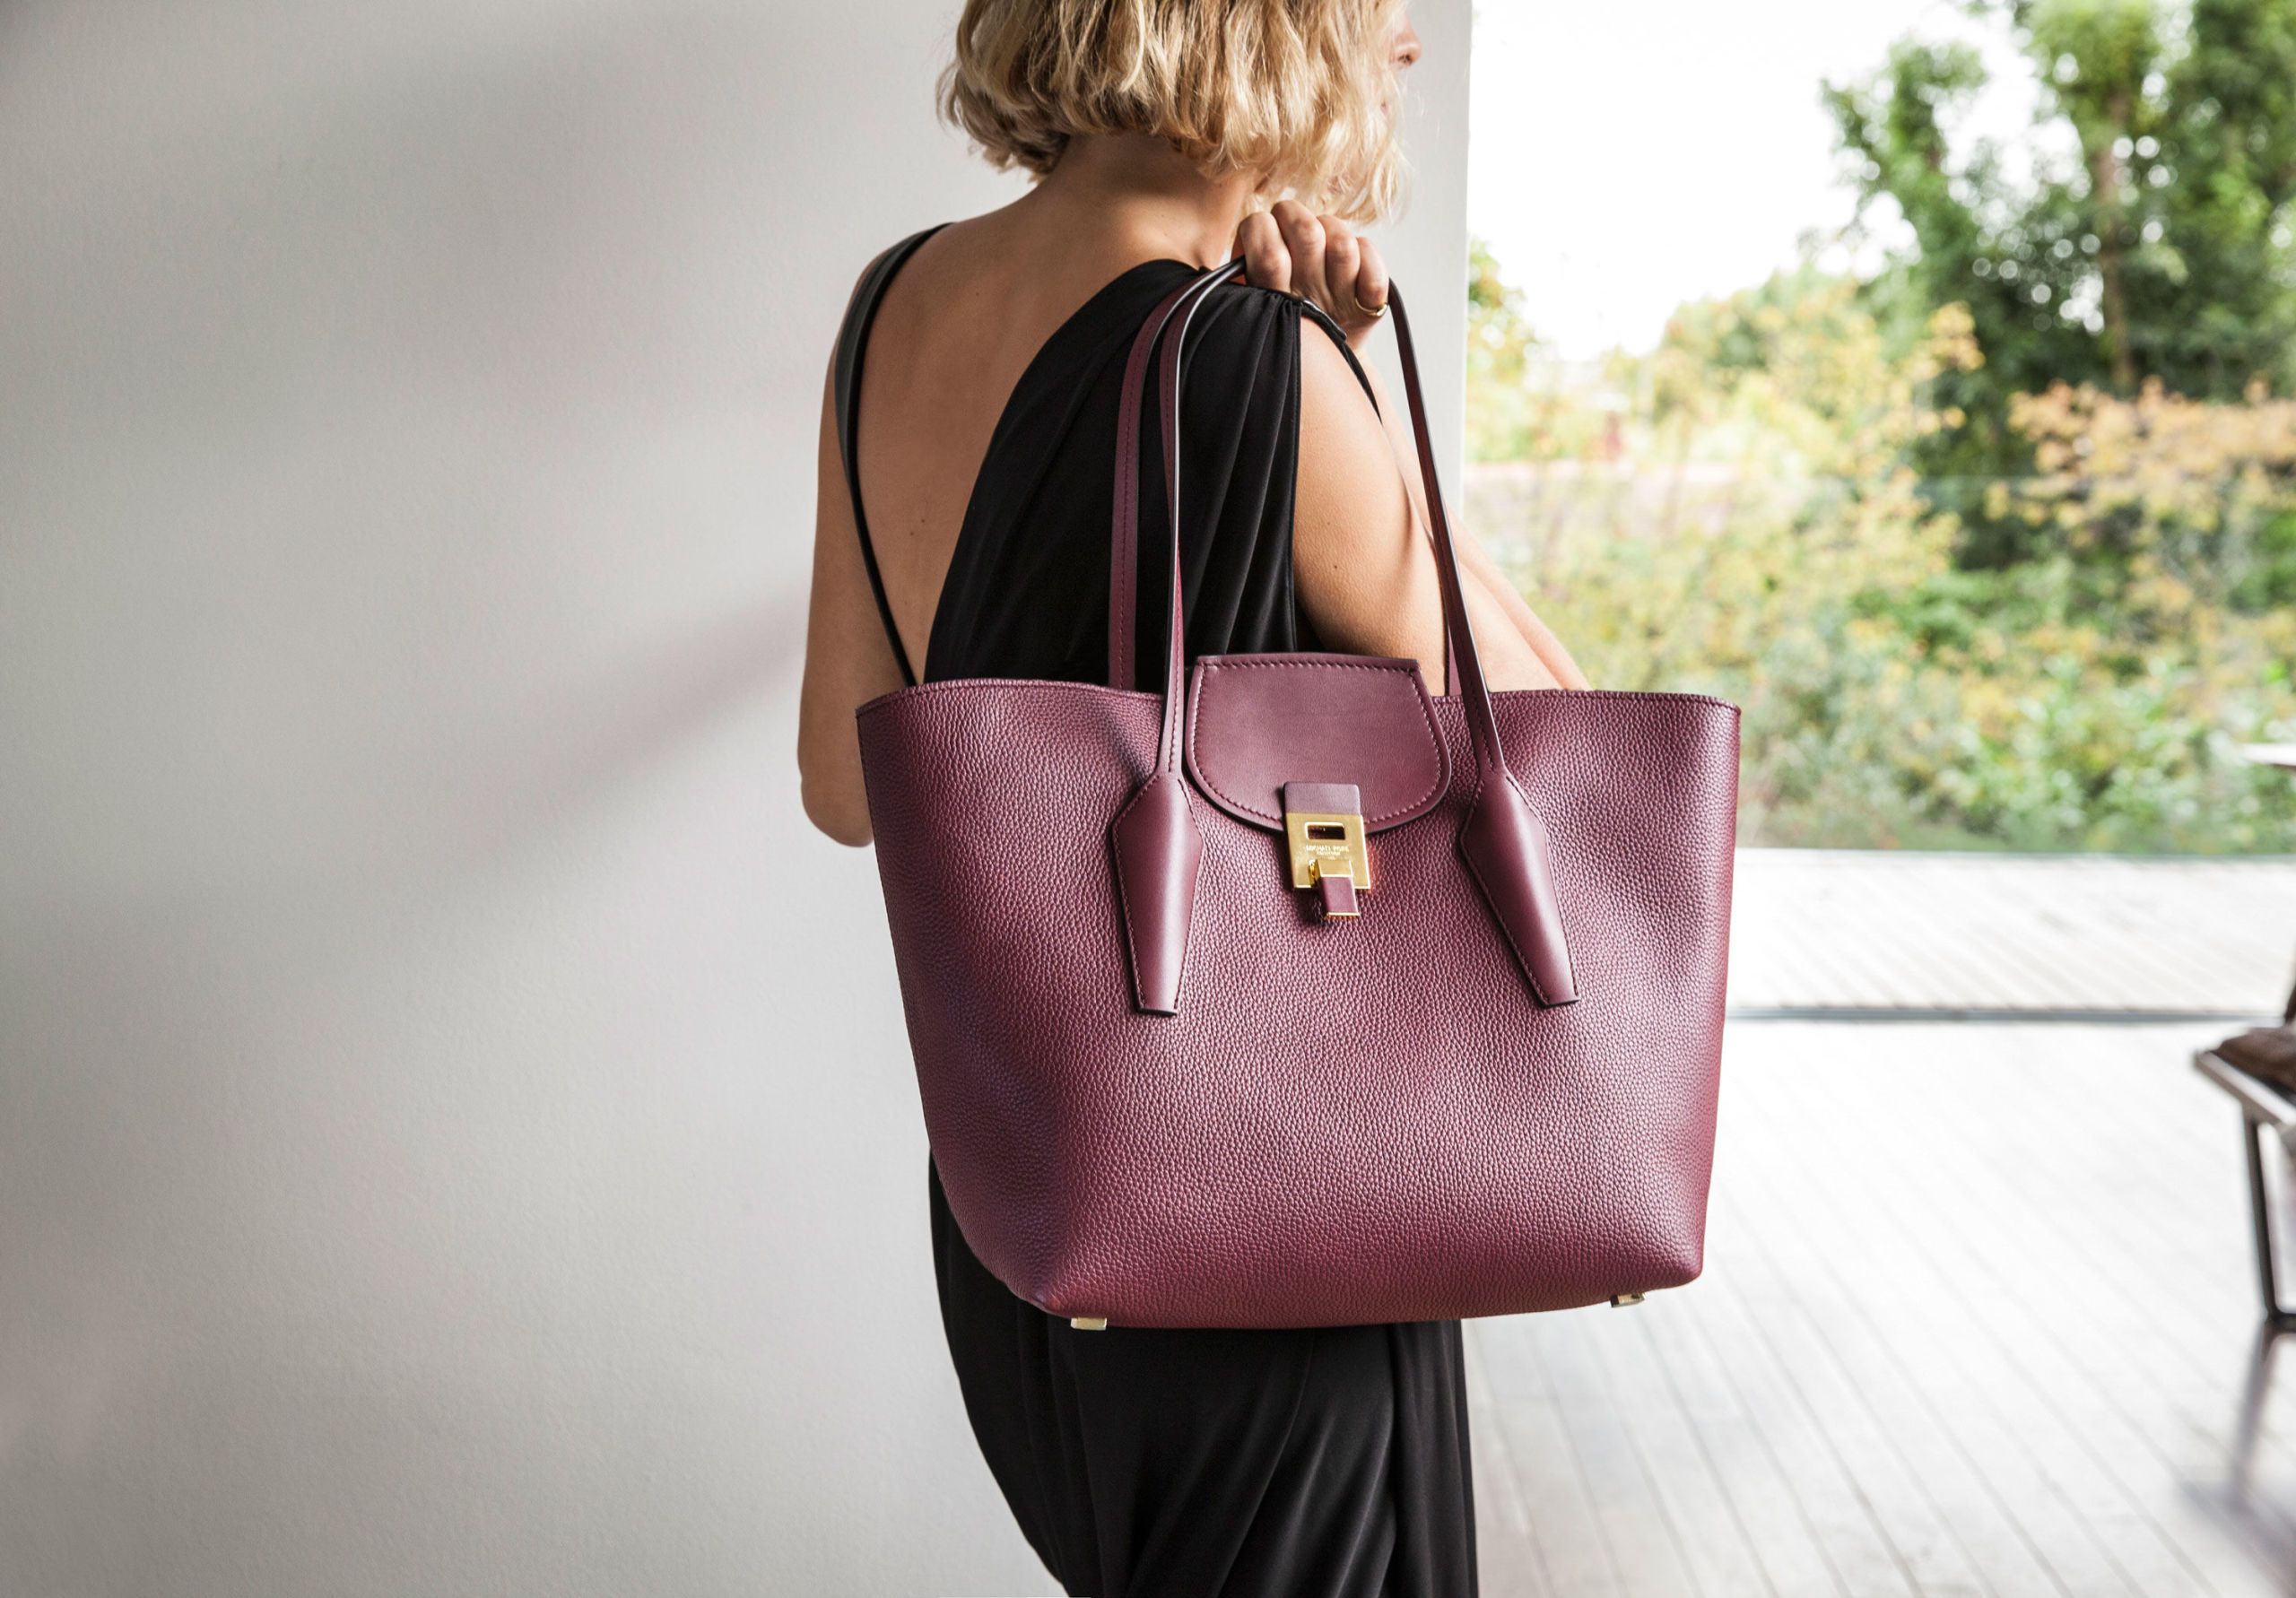 Is handbag women's necessity or addiction? | by Adena Harel | Medium